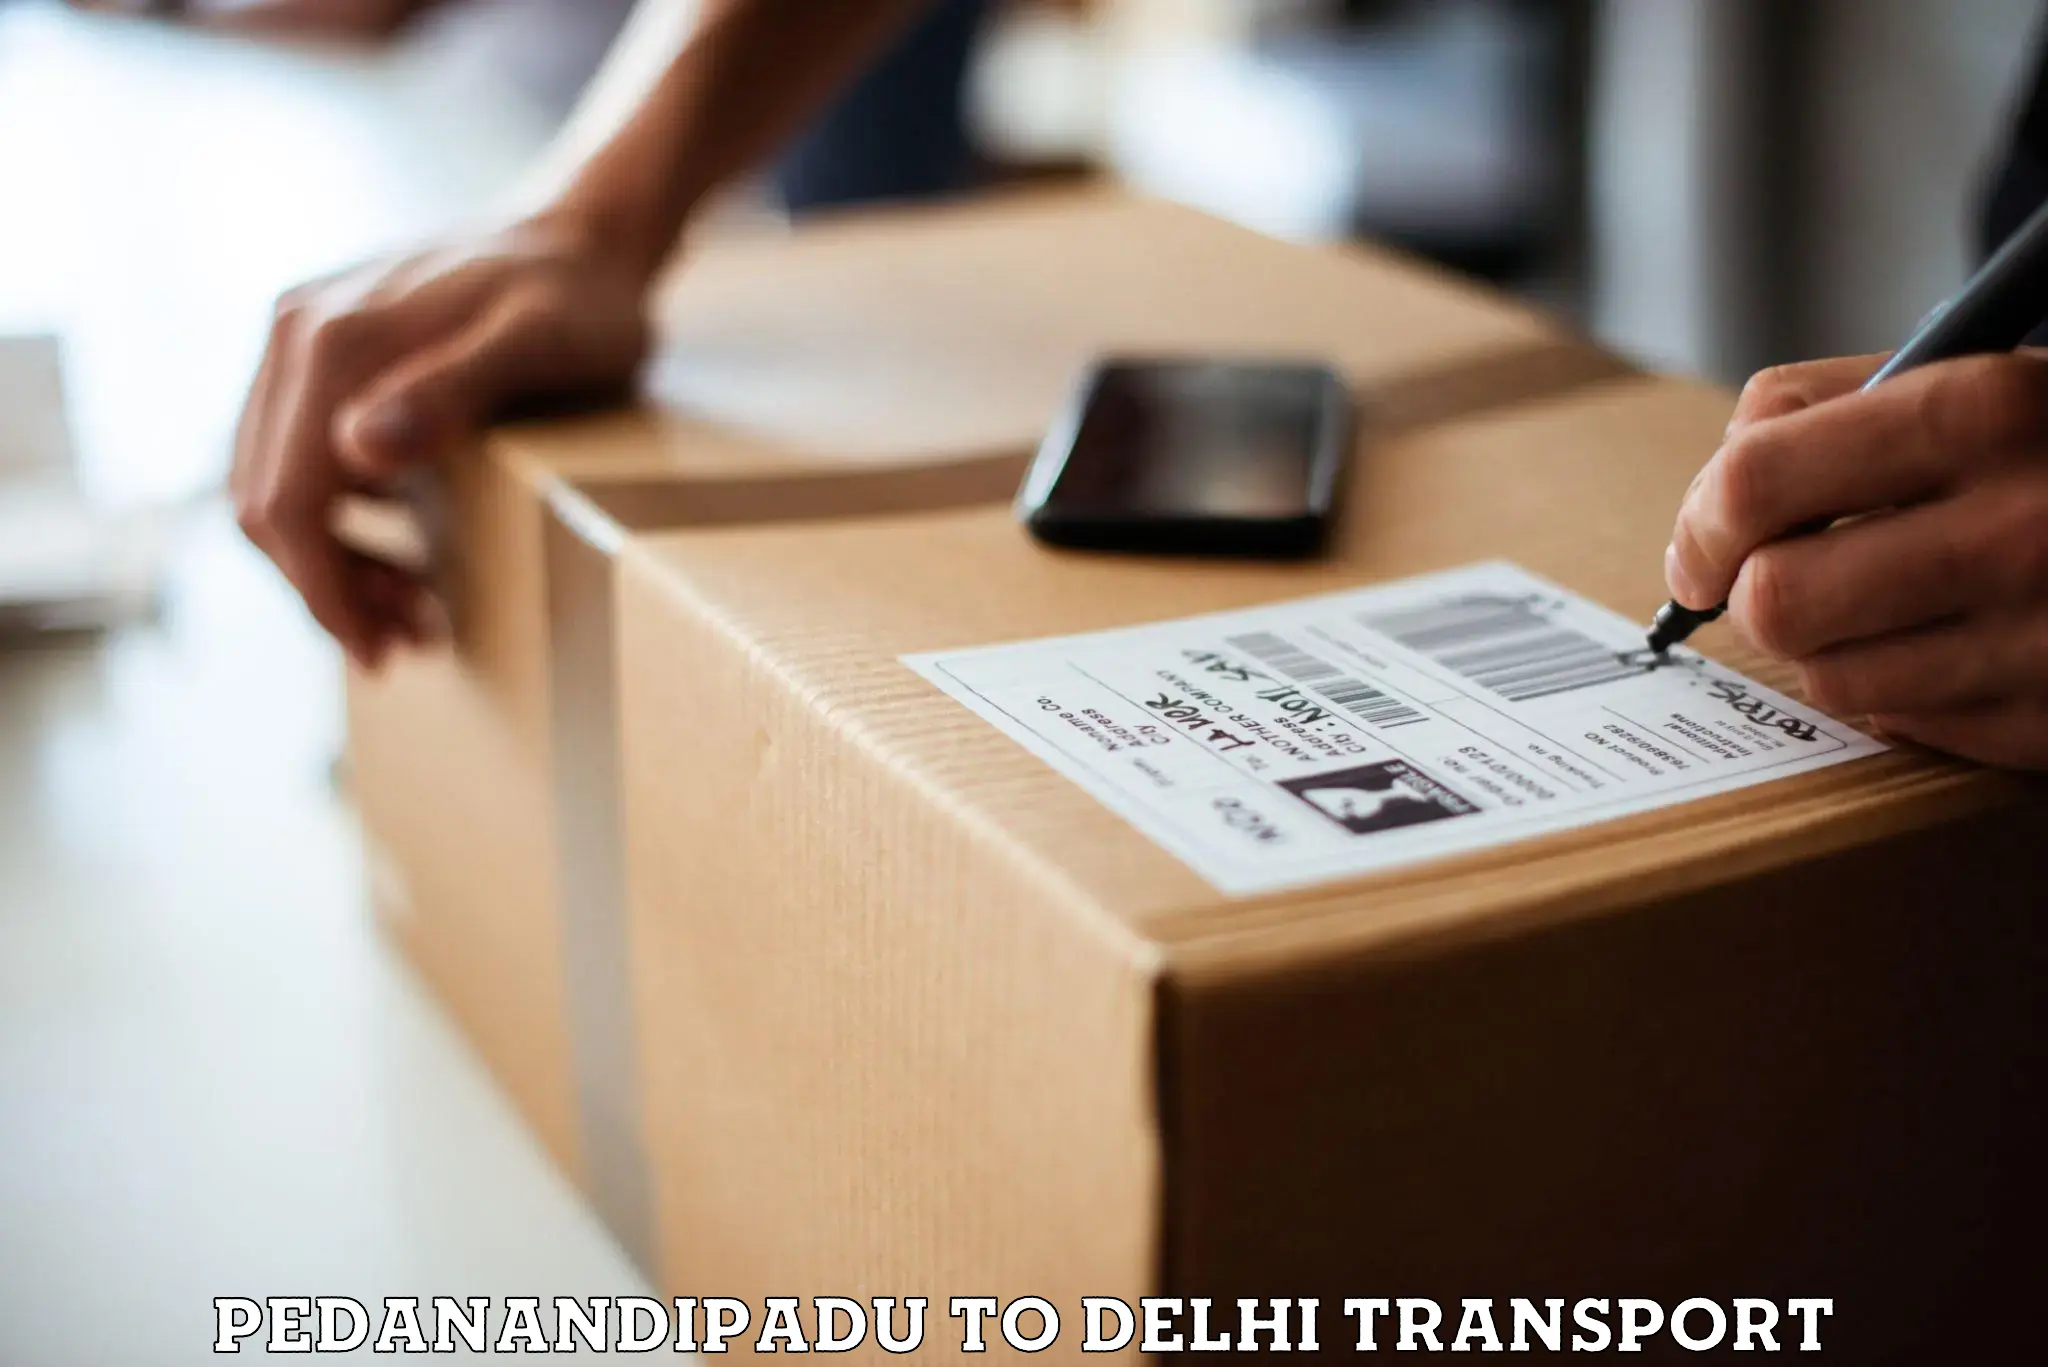 Container transport service Pedanandipadu to Delhi